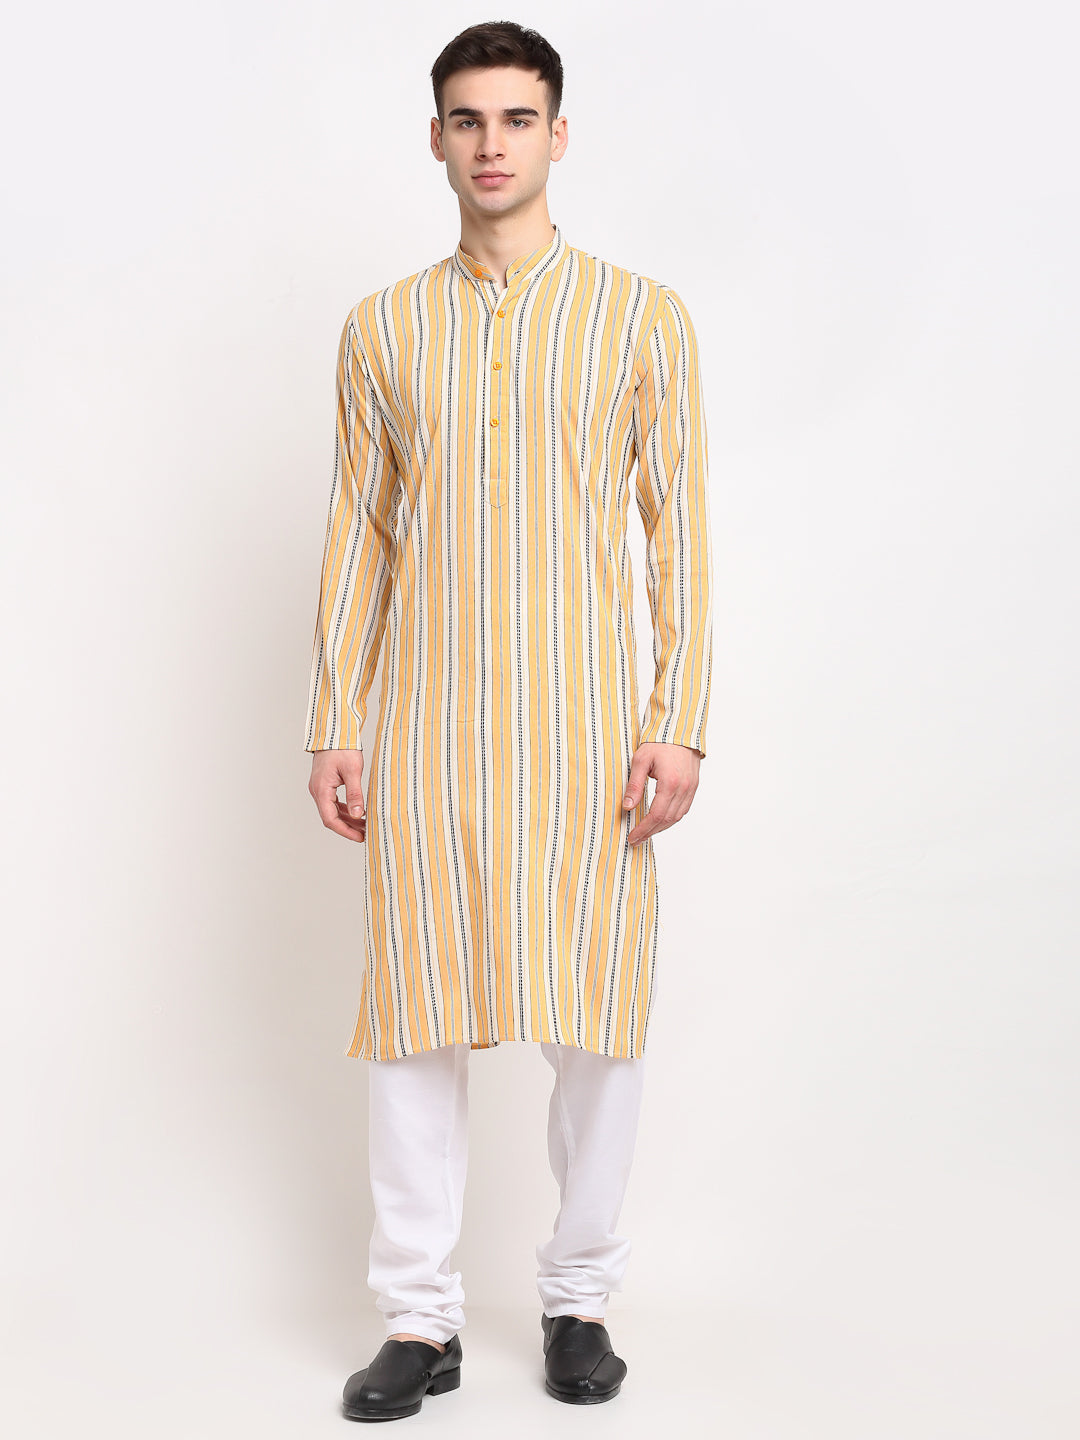 Jompers Men's Yellow Cotton Striped Kurta Payjama Sets